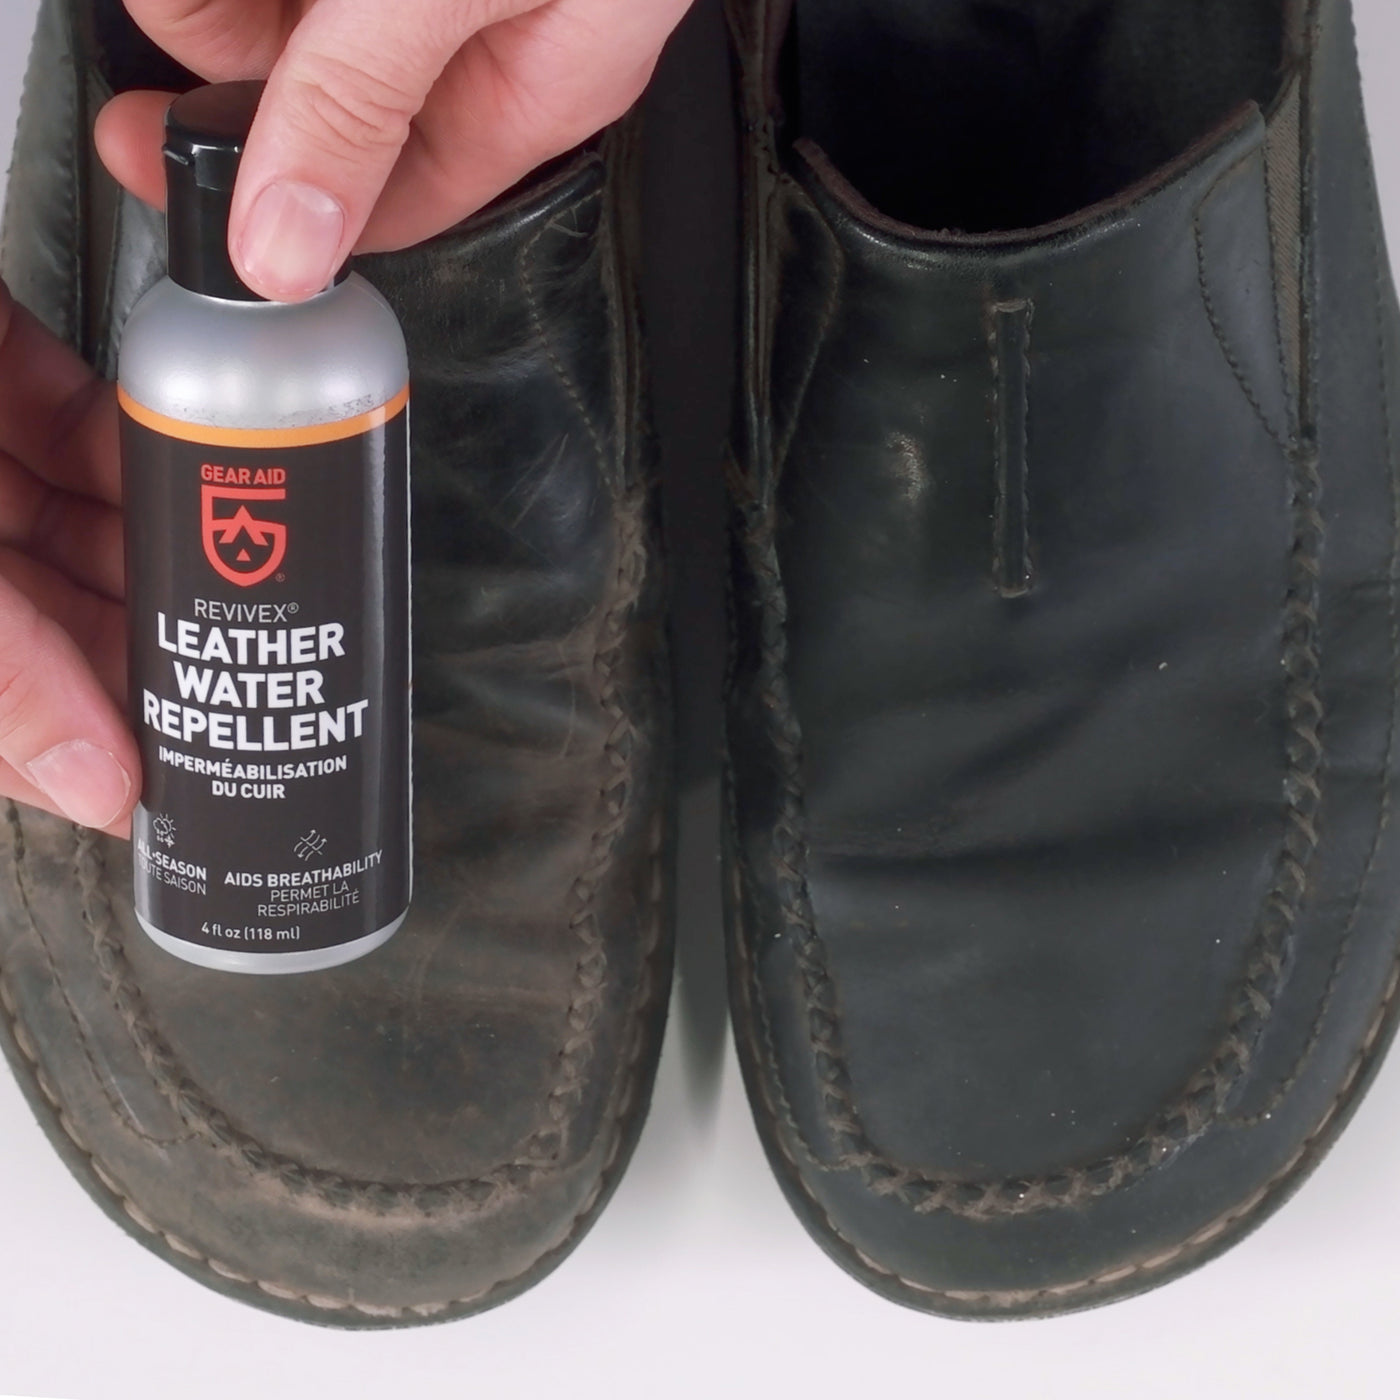 GEAR AID Revivex Boot Conditioner & Repair Kits - Neoprene Protector, Fixes  Cracks, Holes, UV Damage, Dry Feet